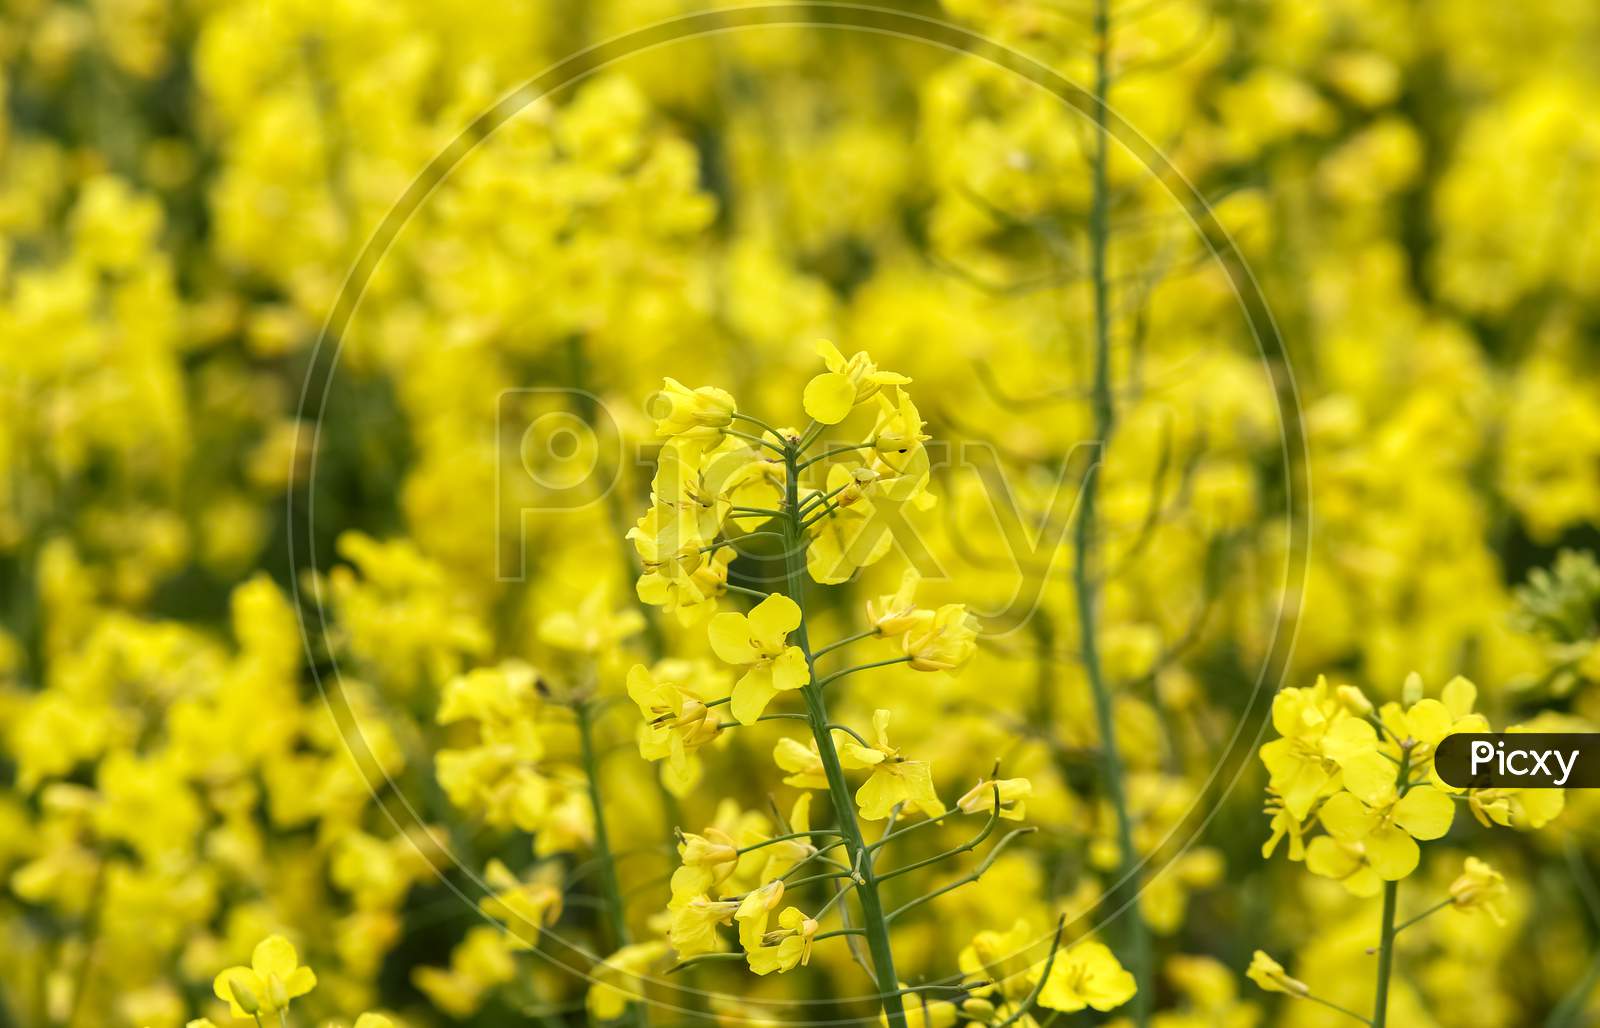 Beautiful yellow blooming rapeseed field found in northern europe